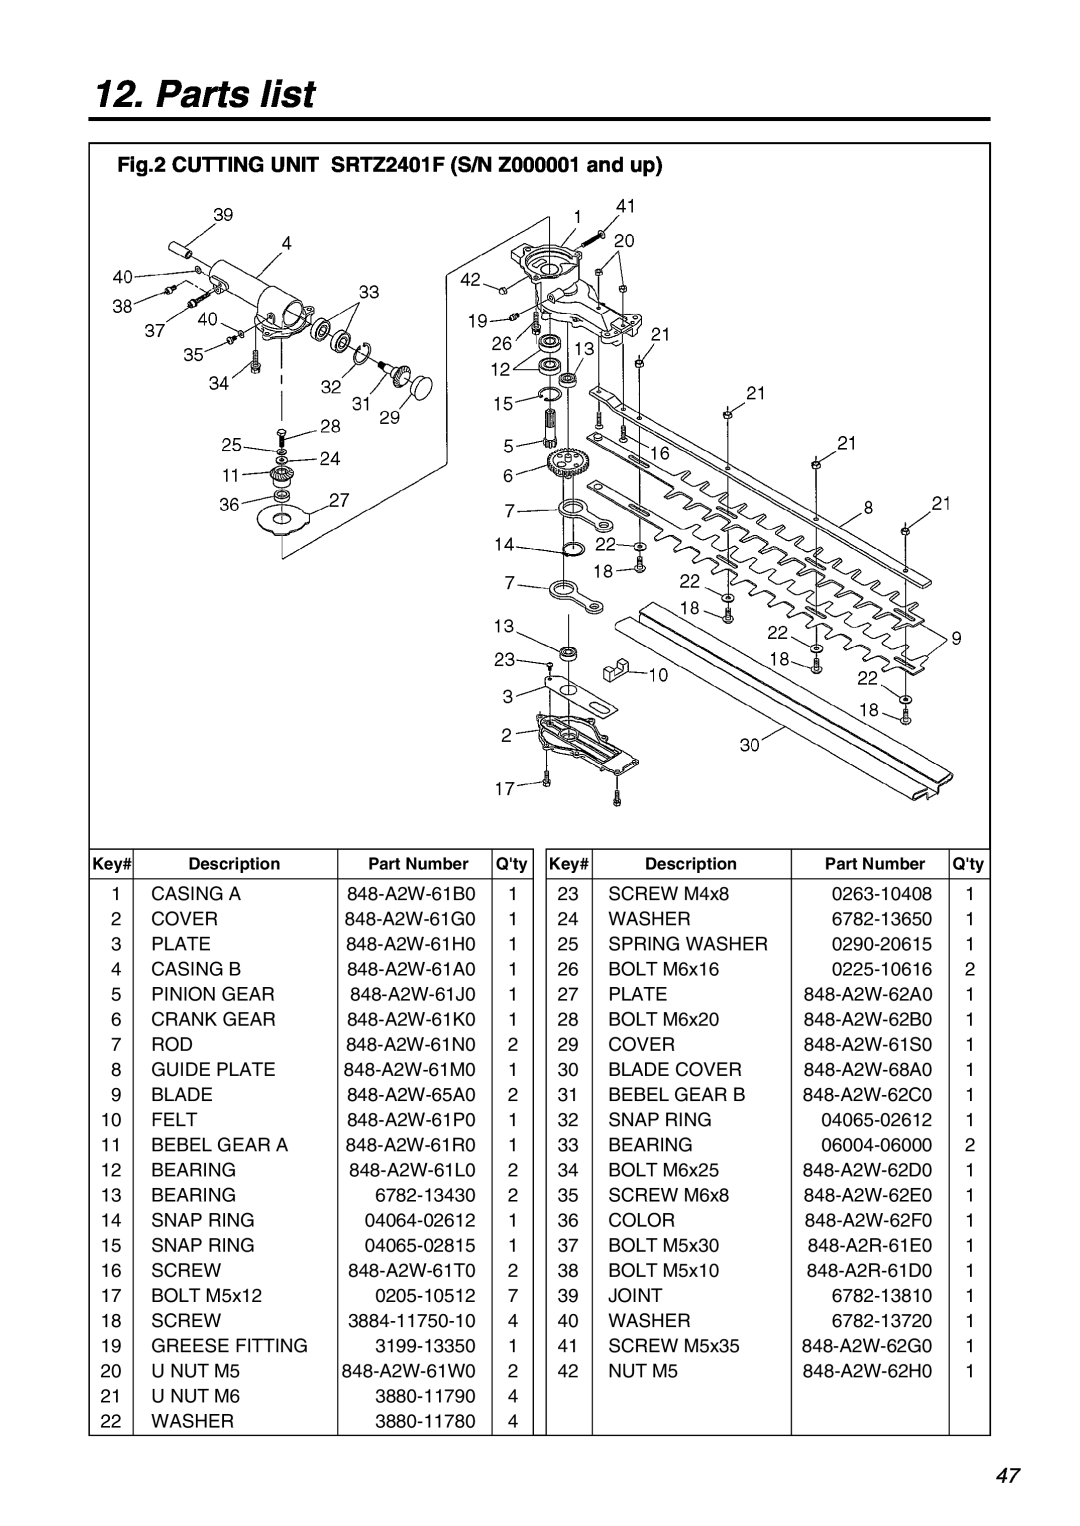 RedMax manual Parts list, CUTTING UNIT SRTZ2401F S/N Z000001 and up 